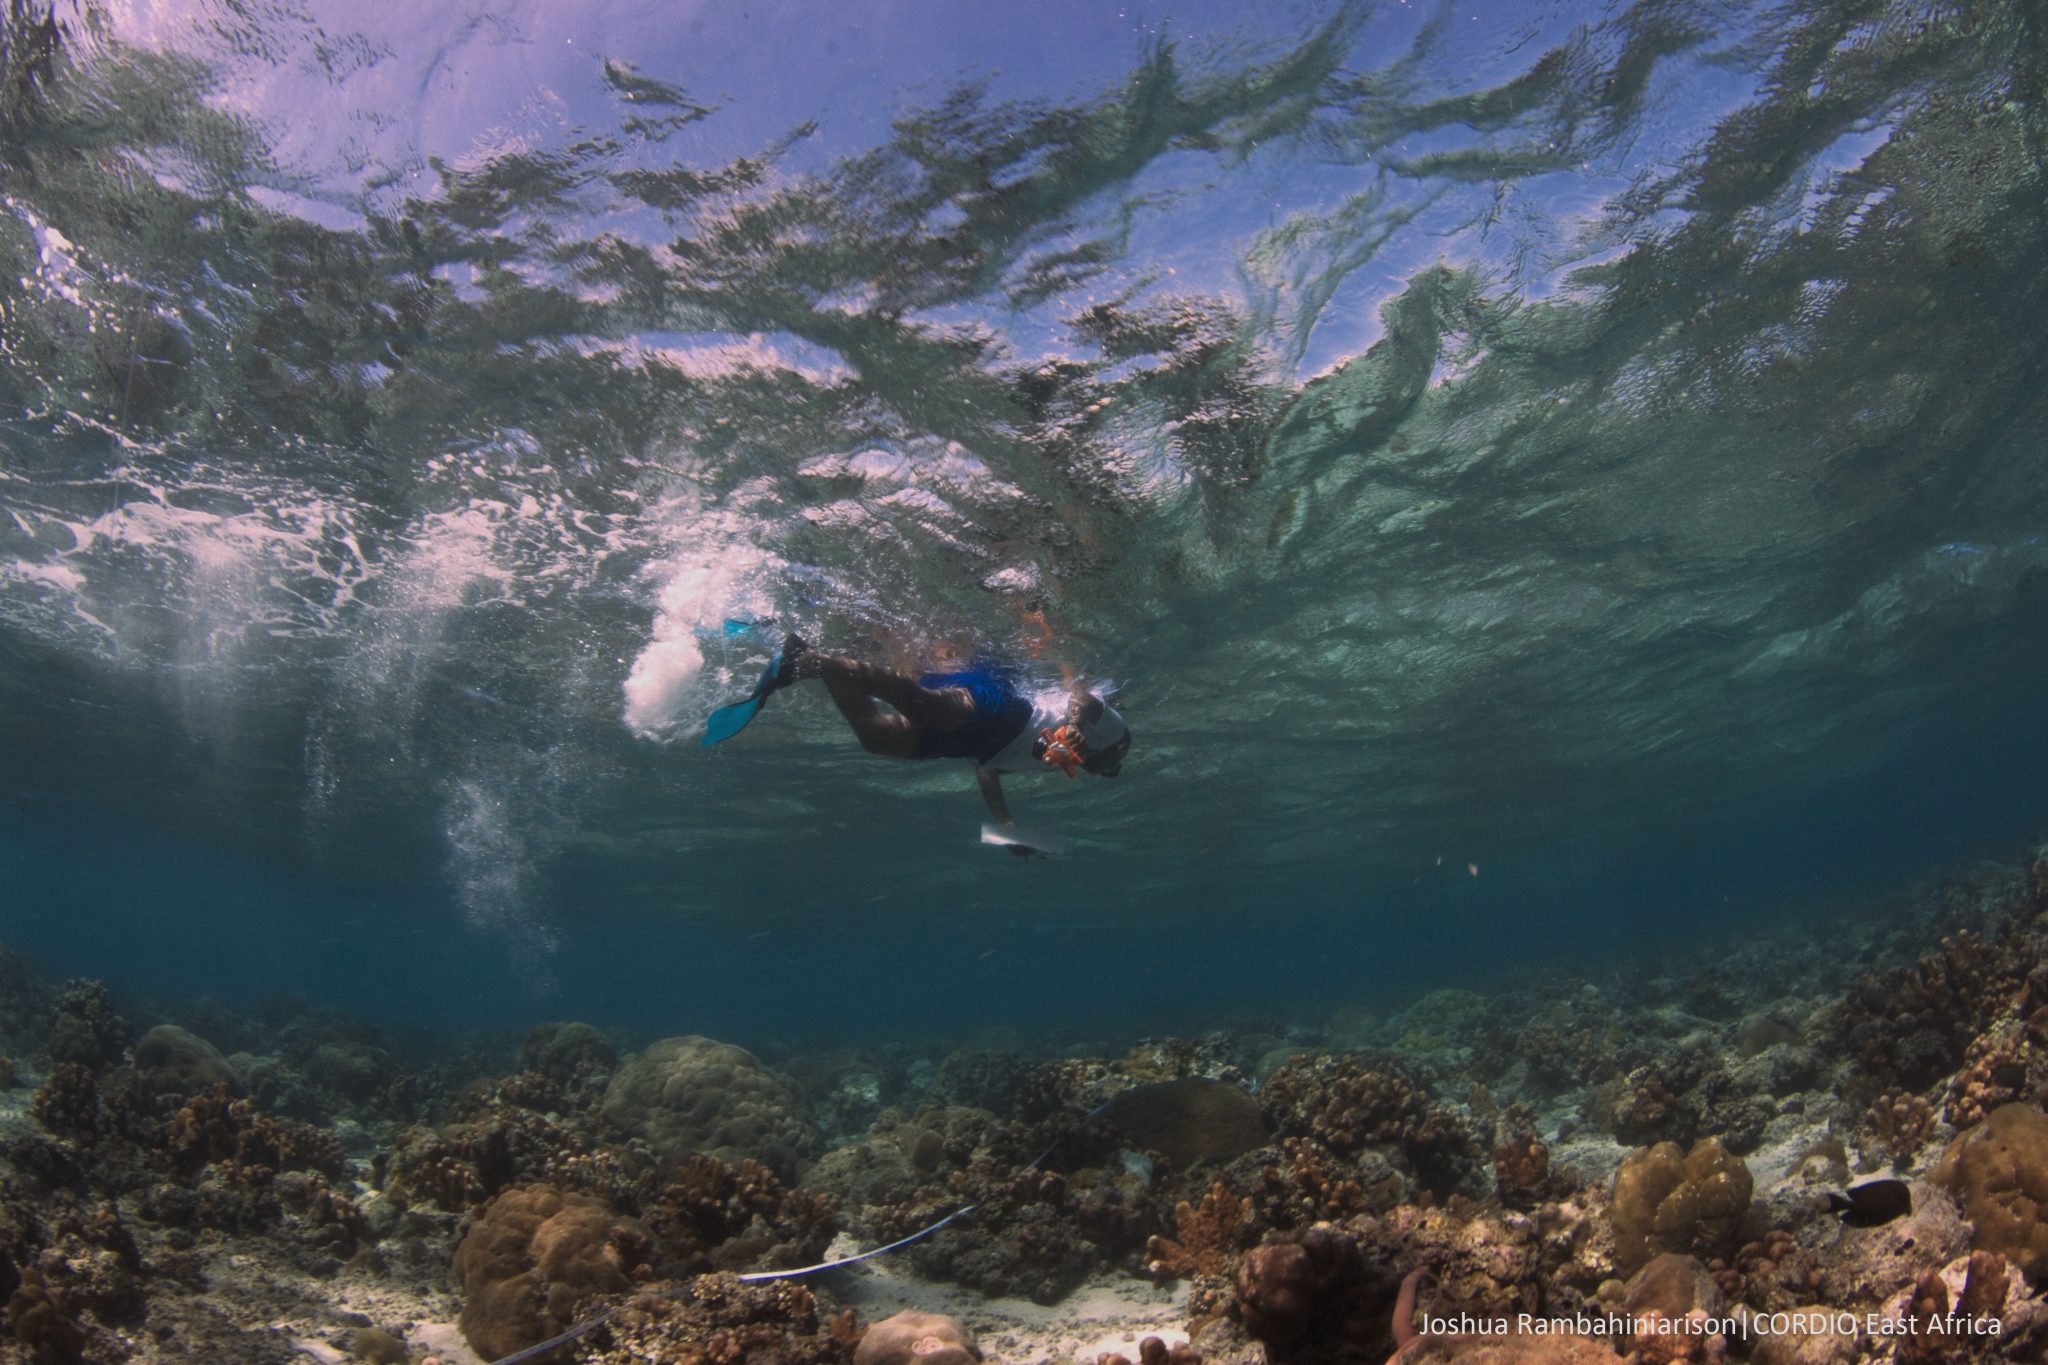 A community member surveys a coral reef.